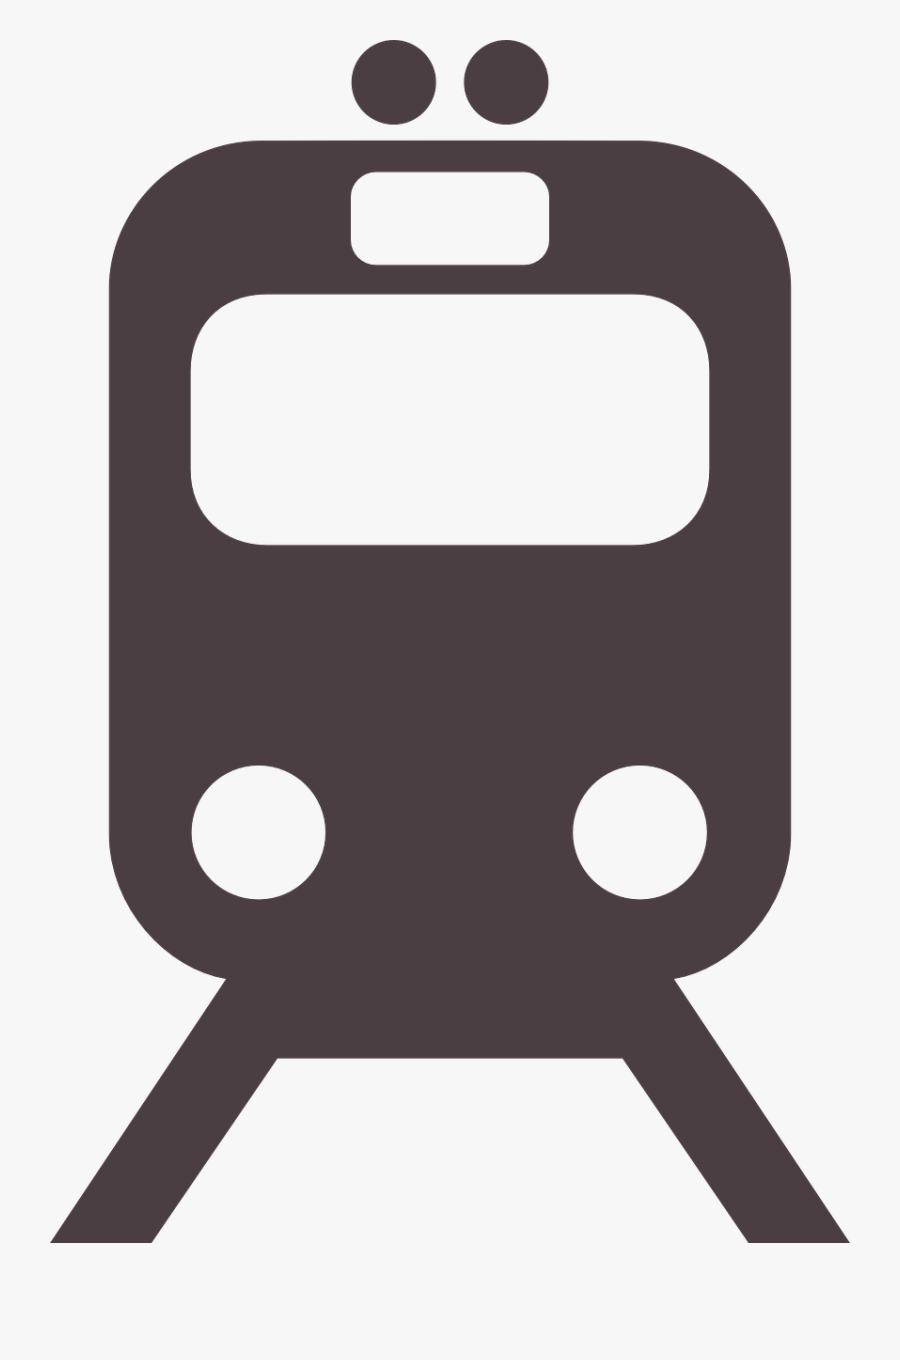 Train Front Pictogram Free Picture - Train Symbol Png, Transparent Clipart